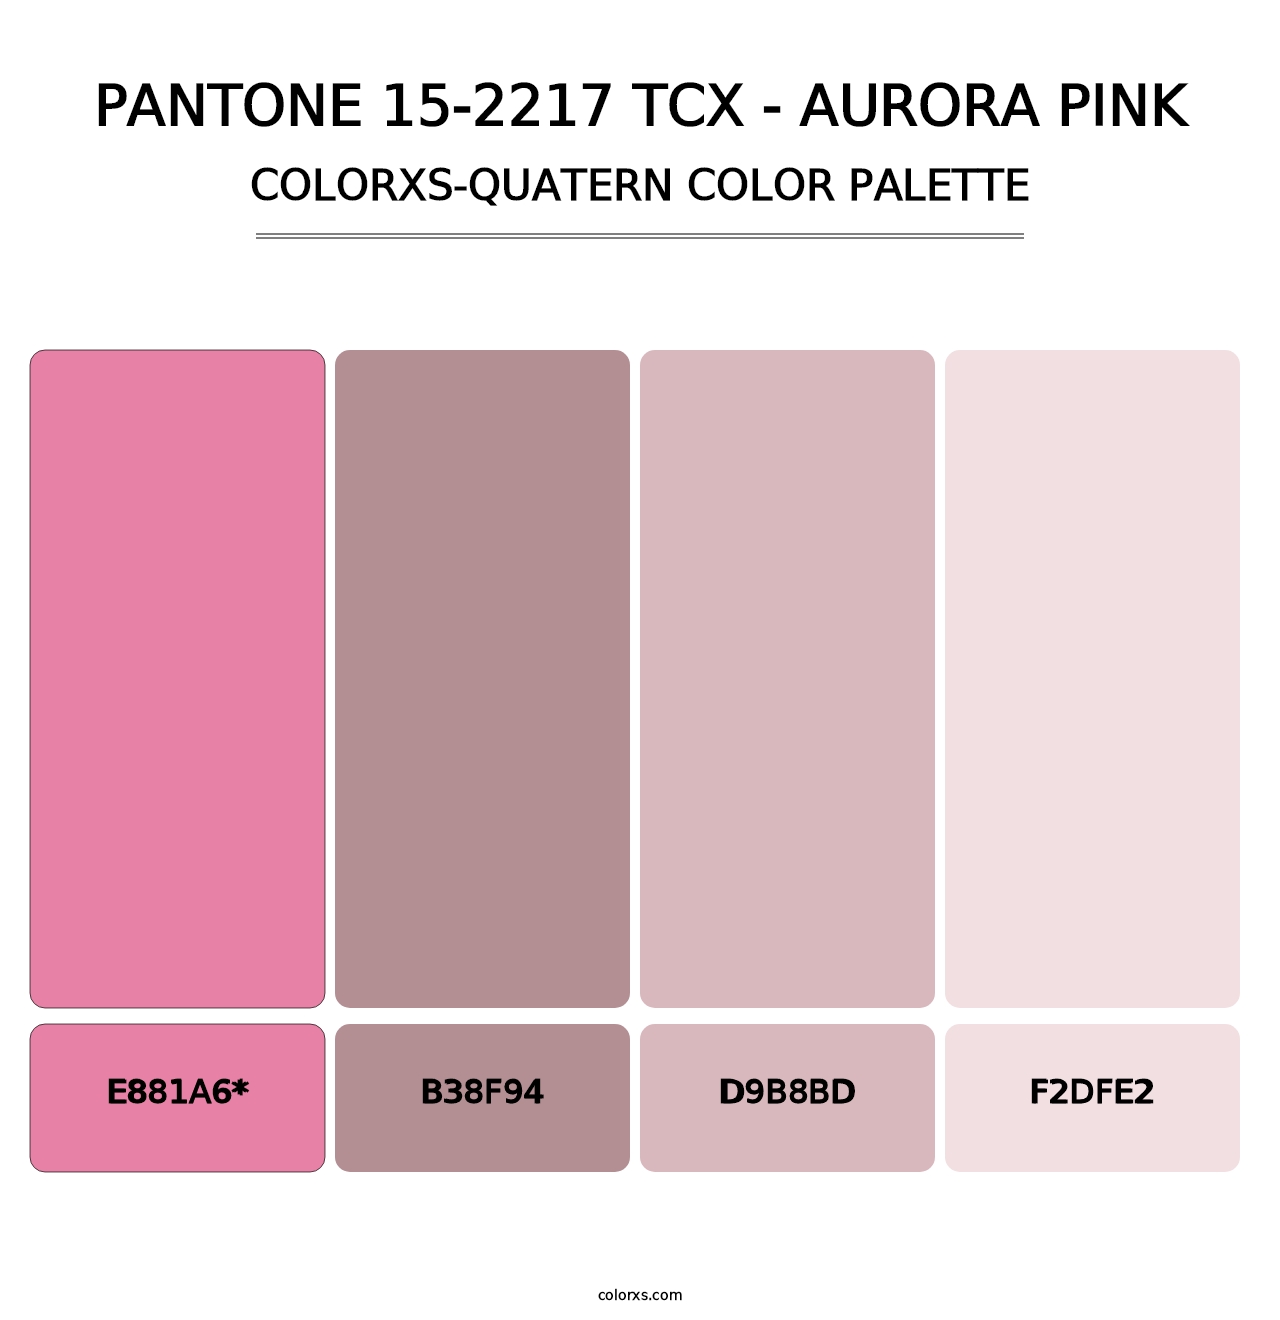 PANTONE 15-2217 TCX - Aurora Pink - Colorxs Quatern Palette